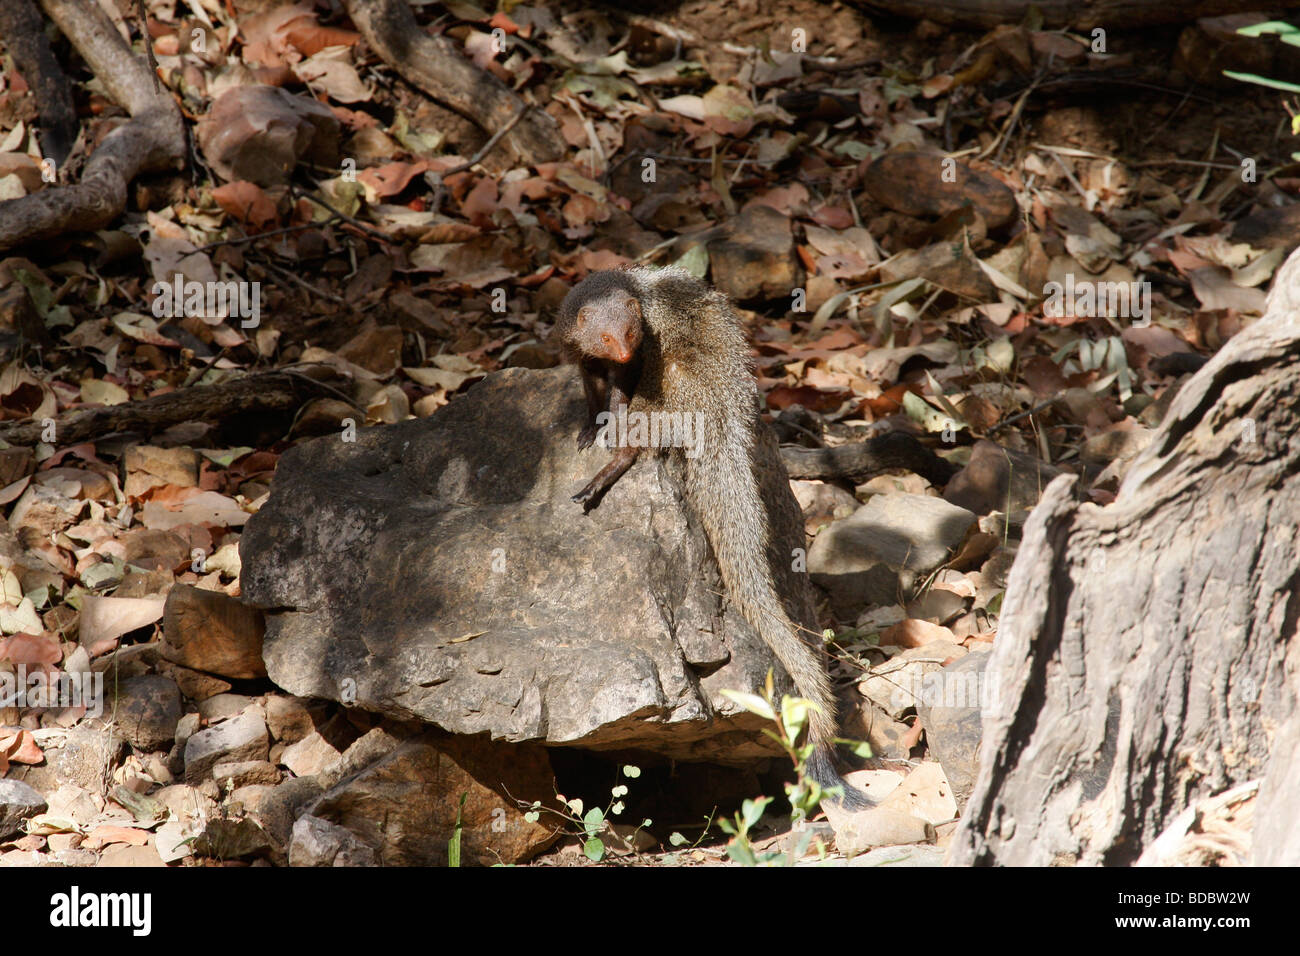 Ruddy mongoose Herpestes smithi at Ranthmabhore Tiger Reserve Stock Photo